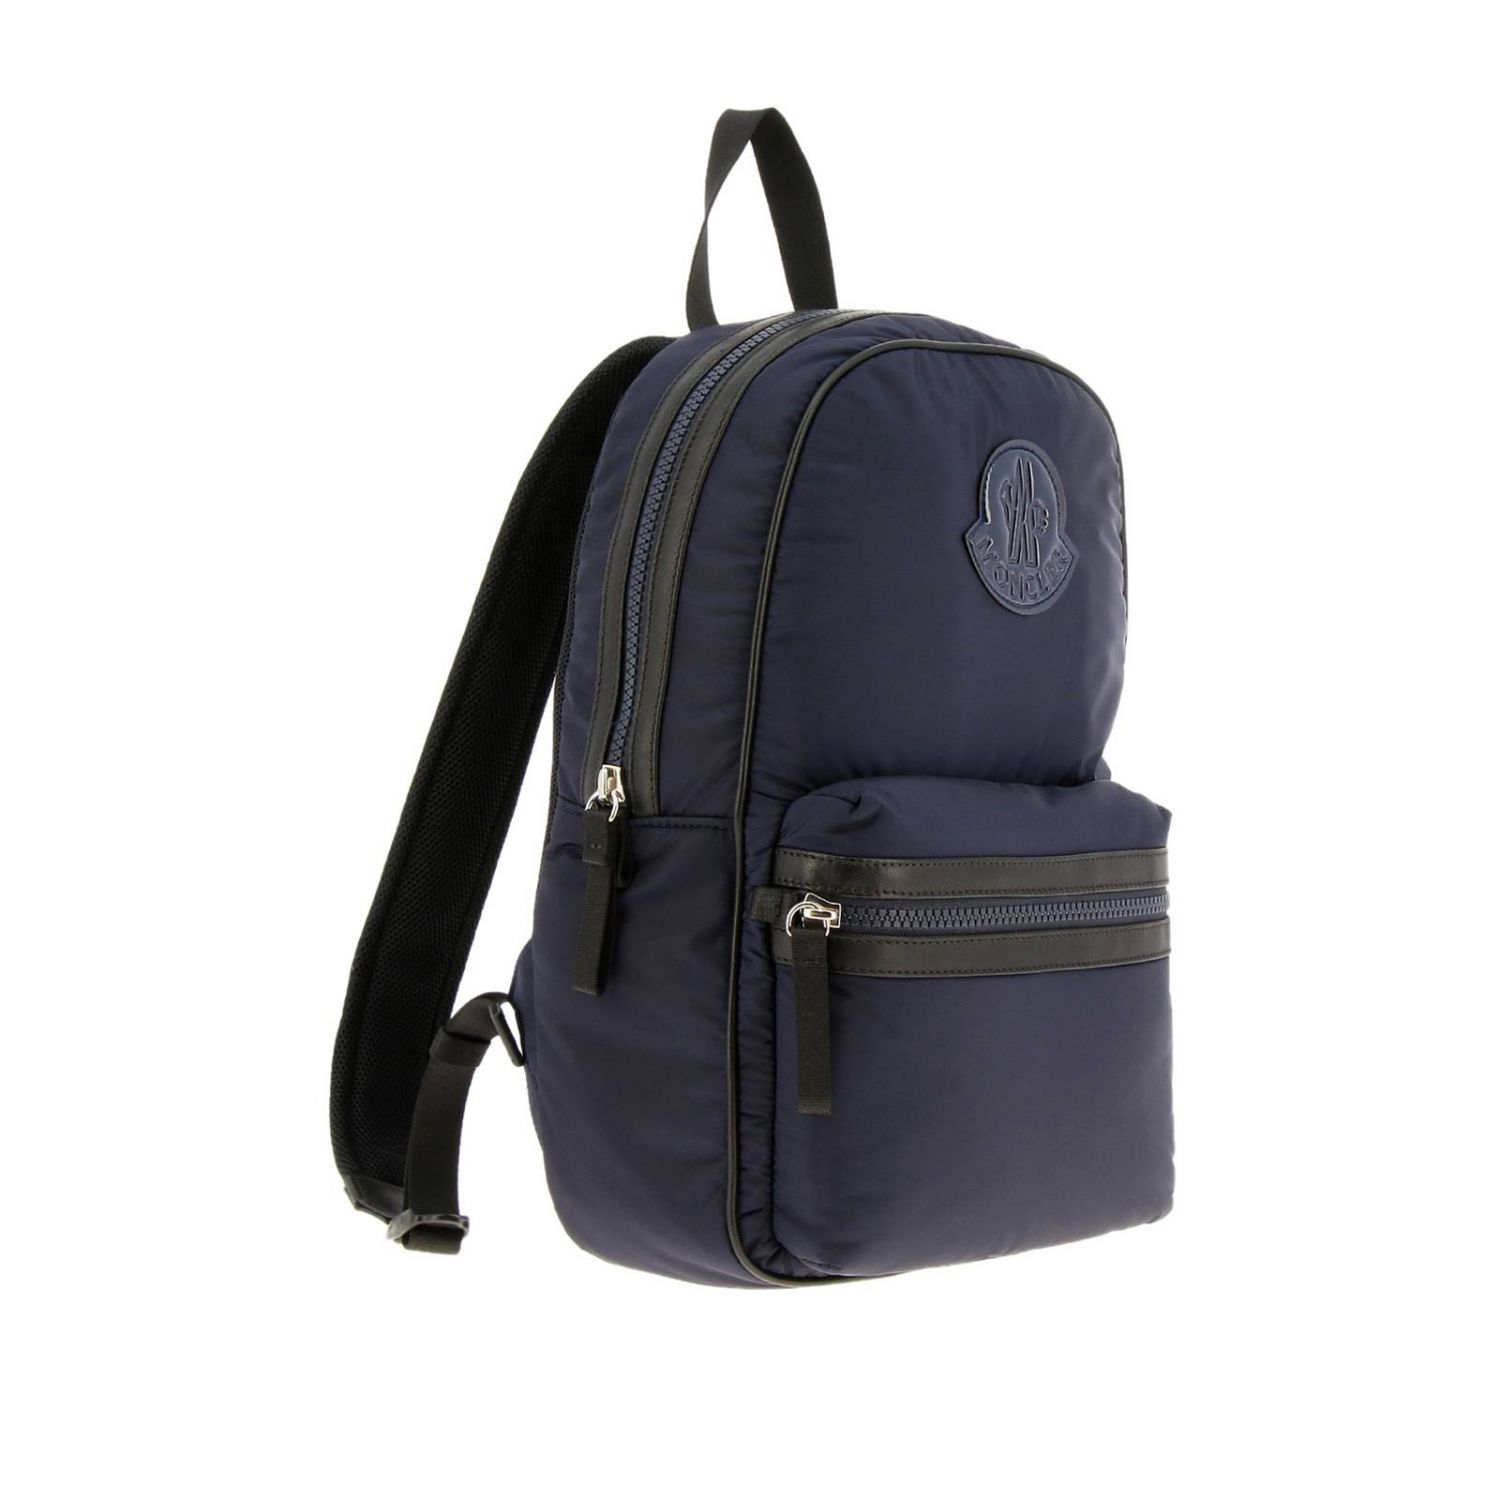 Moncler Outlet: duffel bag for kids - Blue | Moncler duffel bag 00612 ...